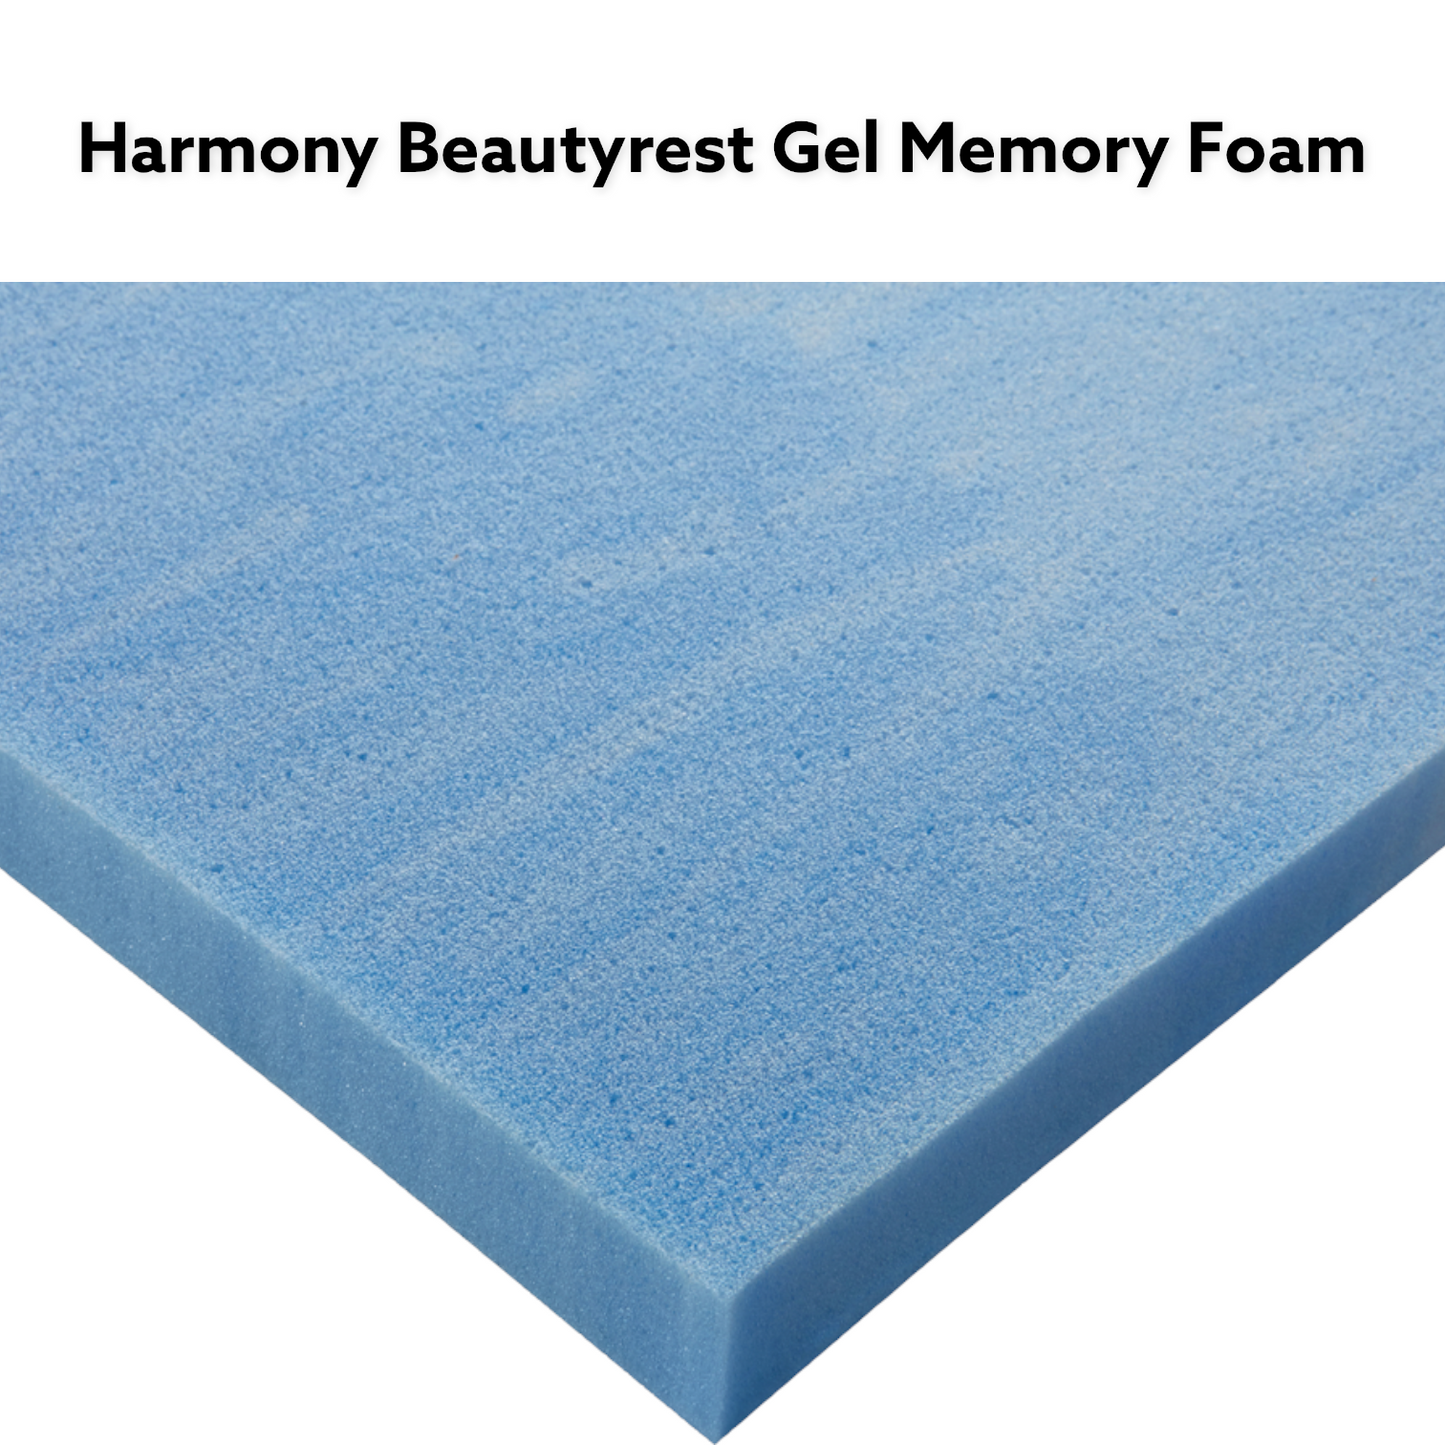 Beautyrest- Harmony- Emerald Bay Ultra Plush